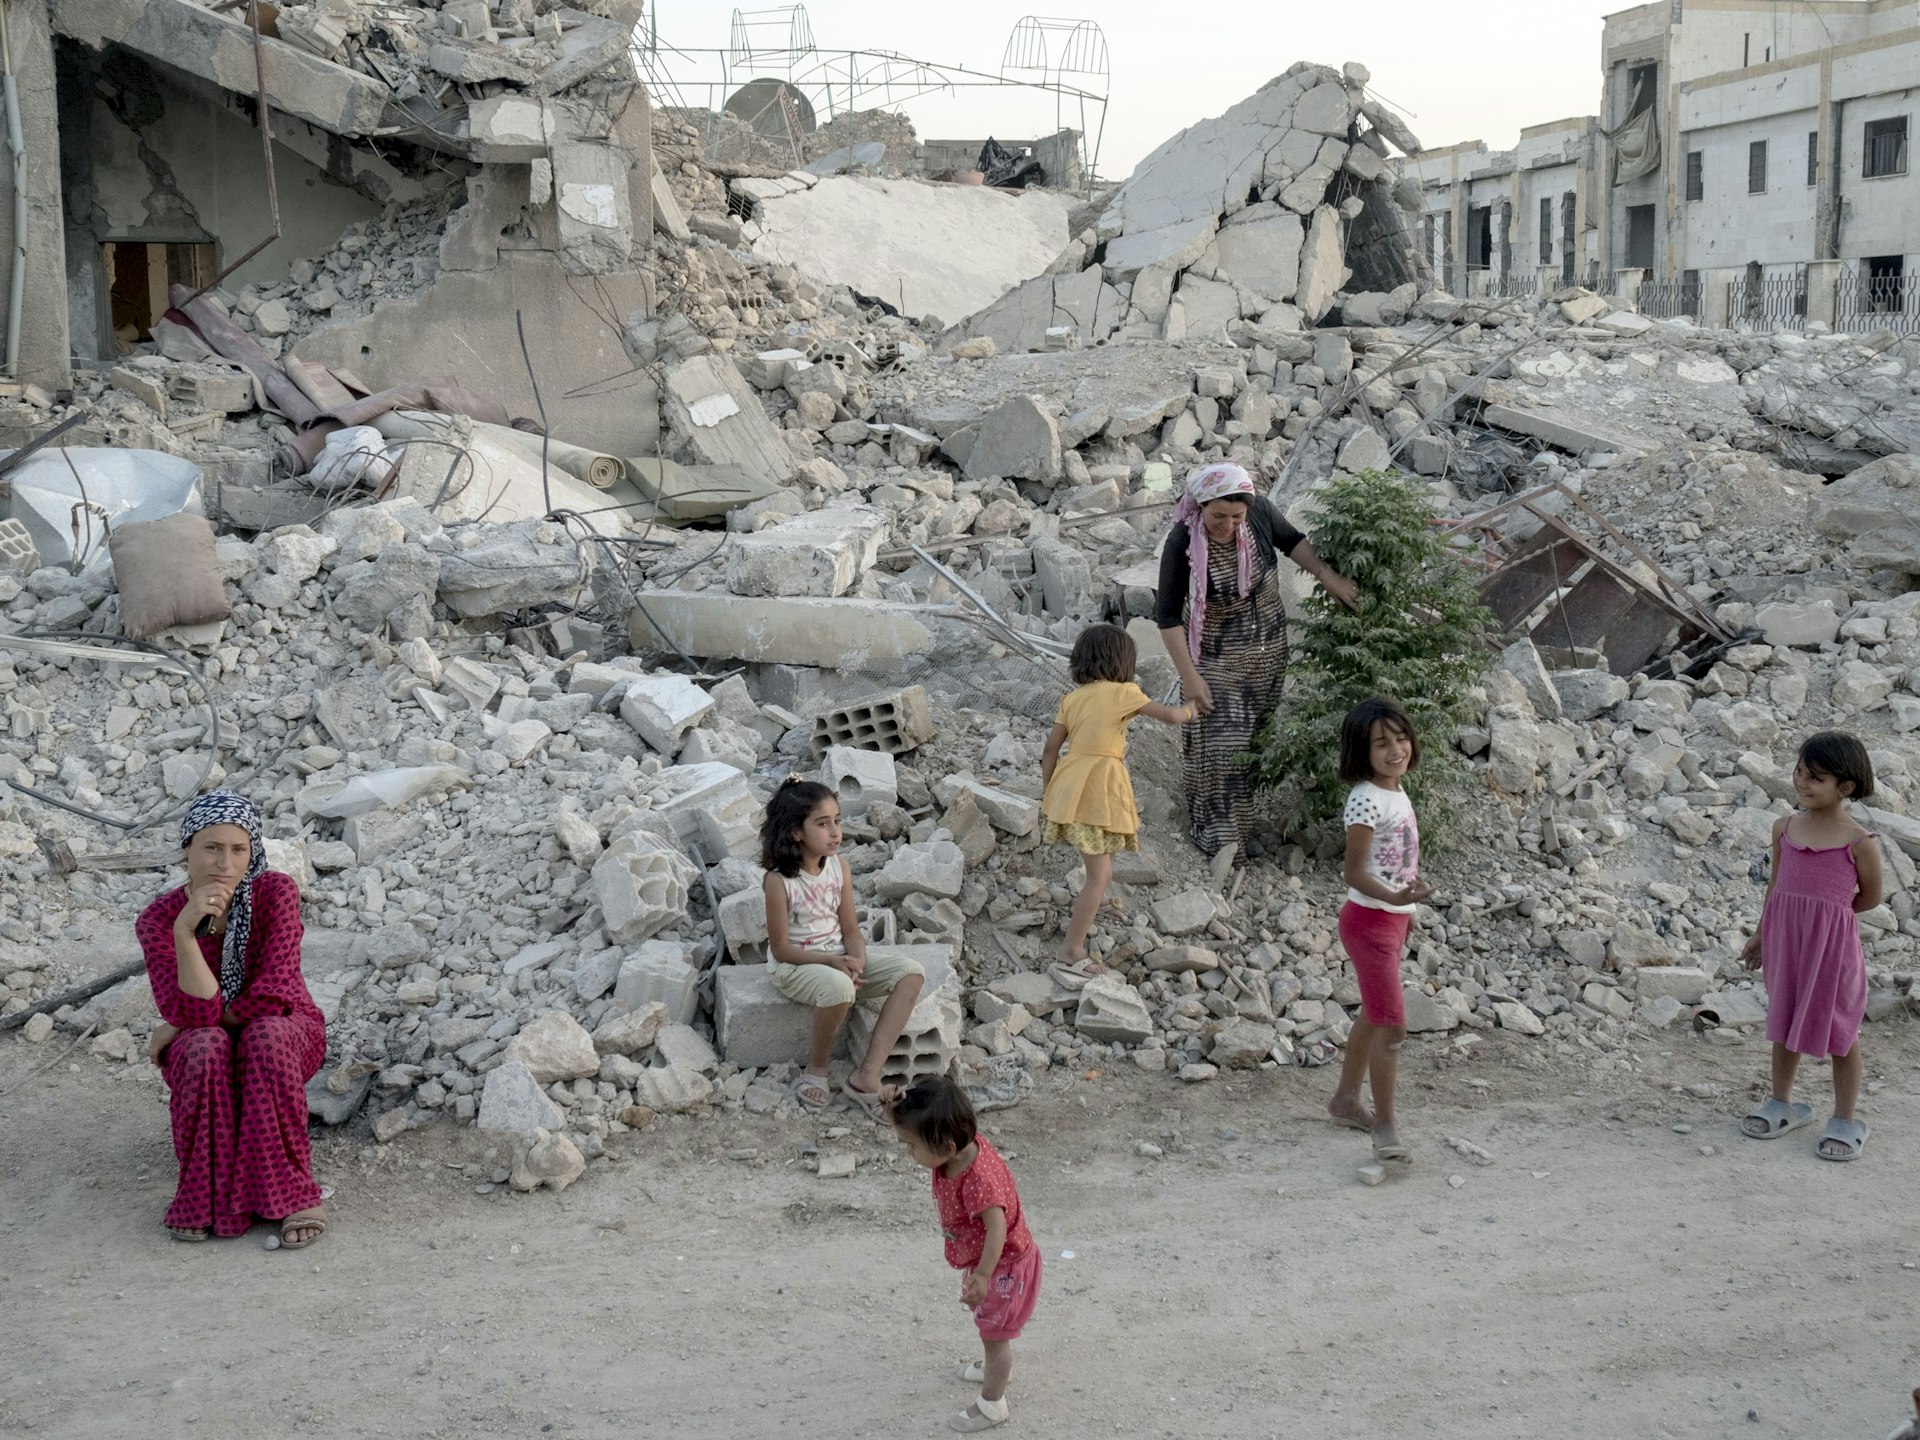 A family stands on what is left of their home. SYRIA. Kobani / Kobane (Arabic: Ayn al Arab). 06 August 2015. © Lorenzo Meloni